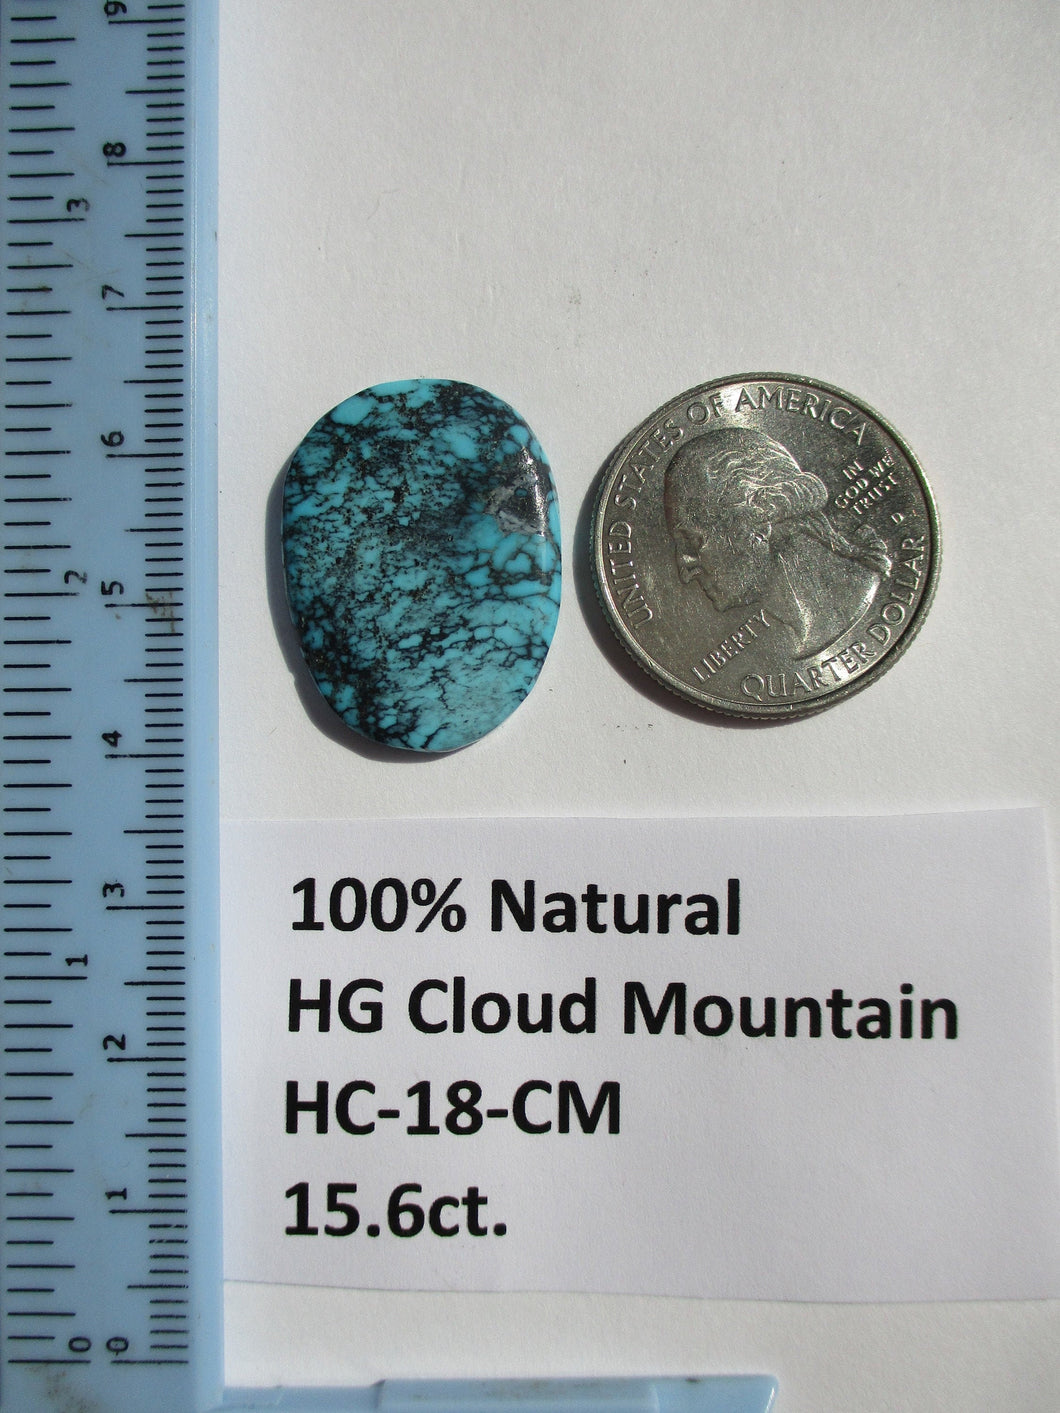 15.6 ct. (26x19x3 mm) 100% Natural High Grade Web Cloud Mountain (Hubei) Turquoise Cabochon Gemstone, HC 18